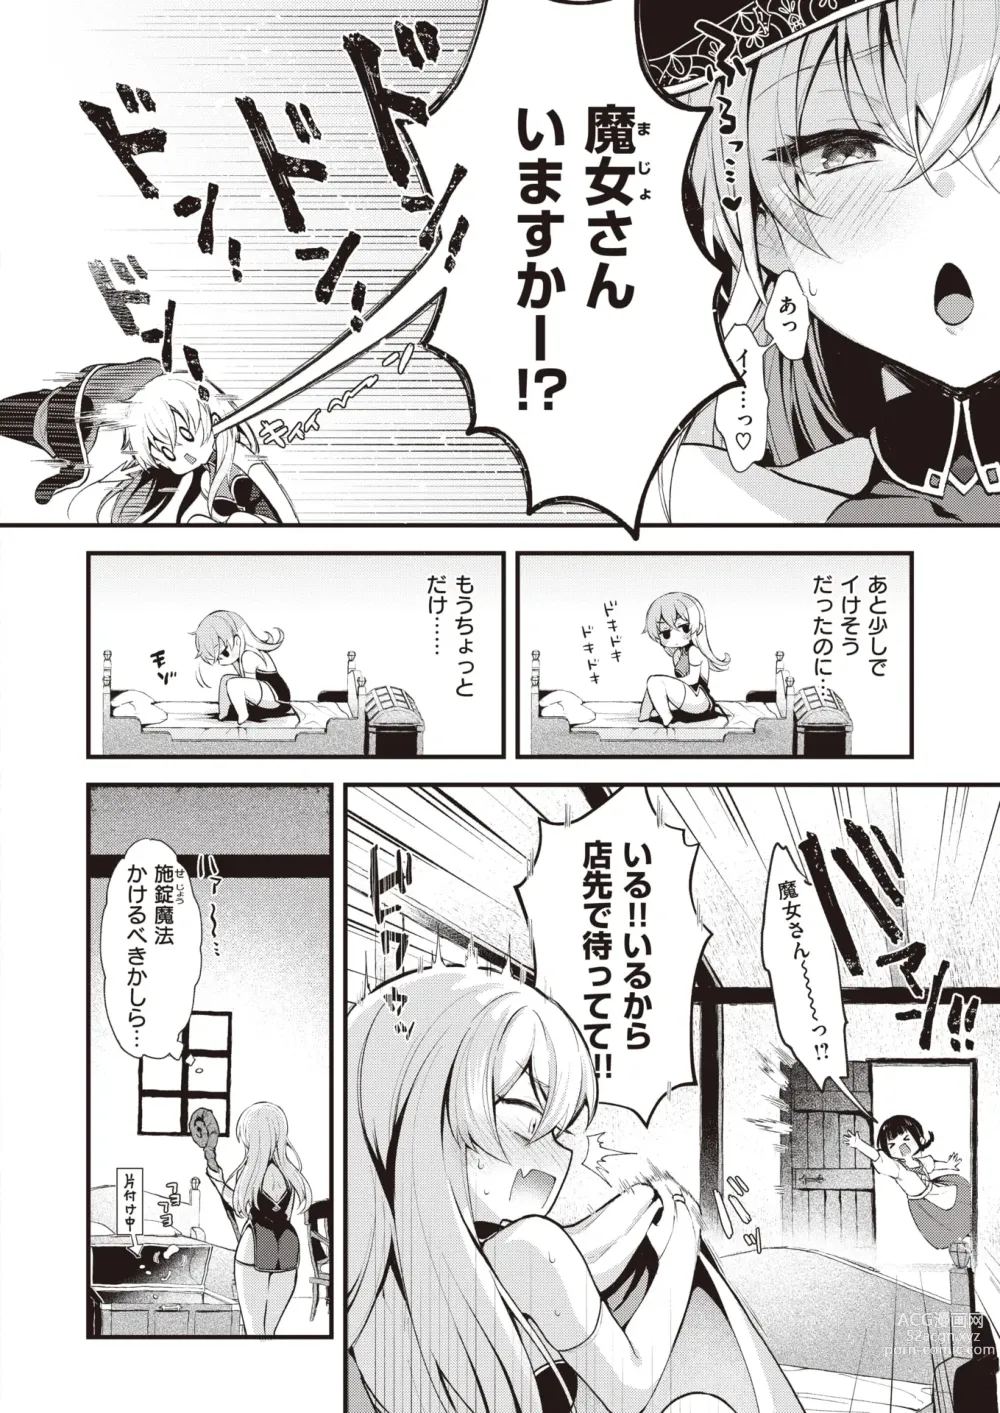 Page 3 of manga Isekai Rakuten Vol. 25